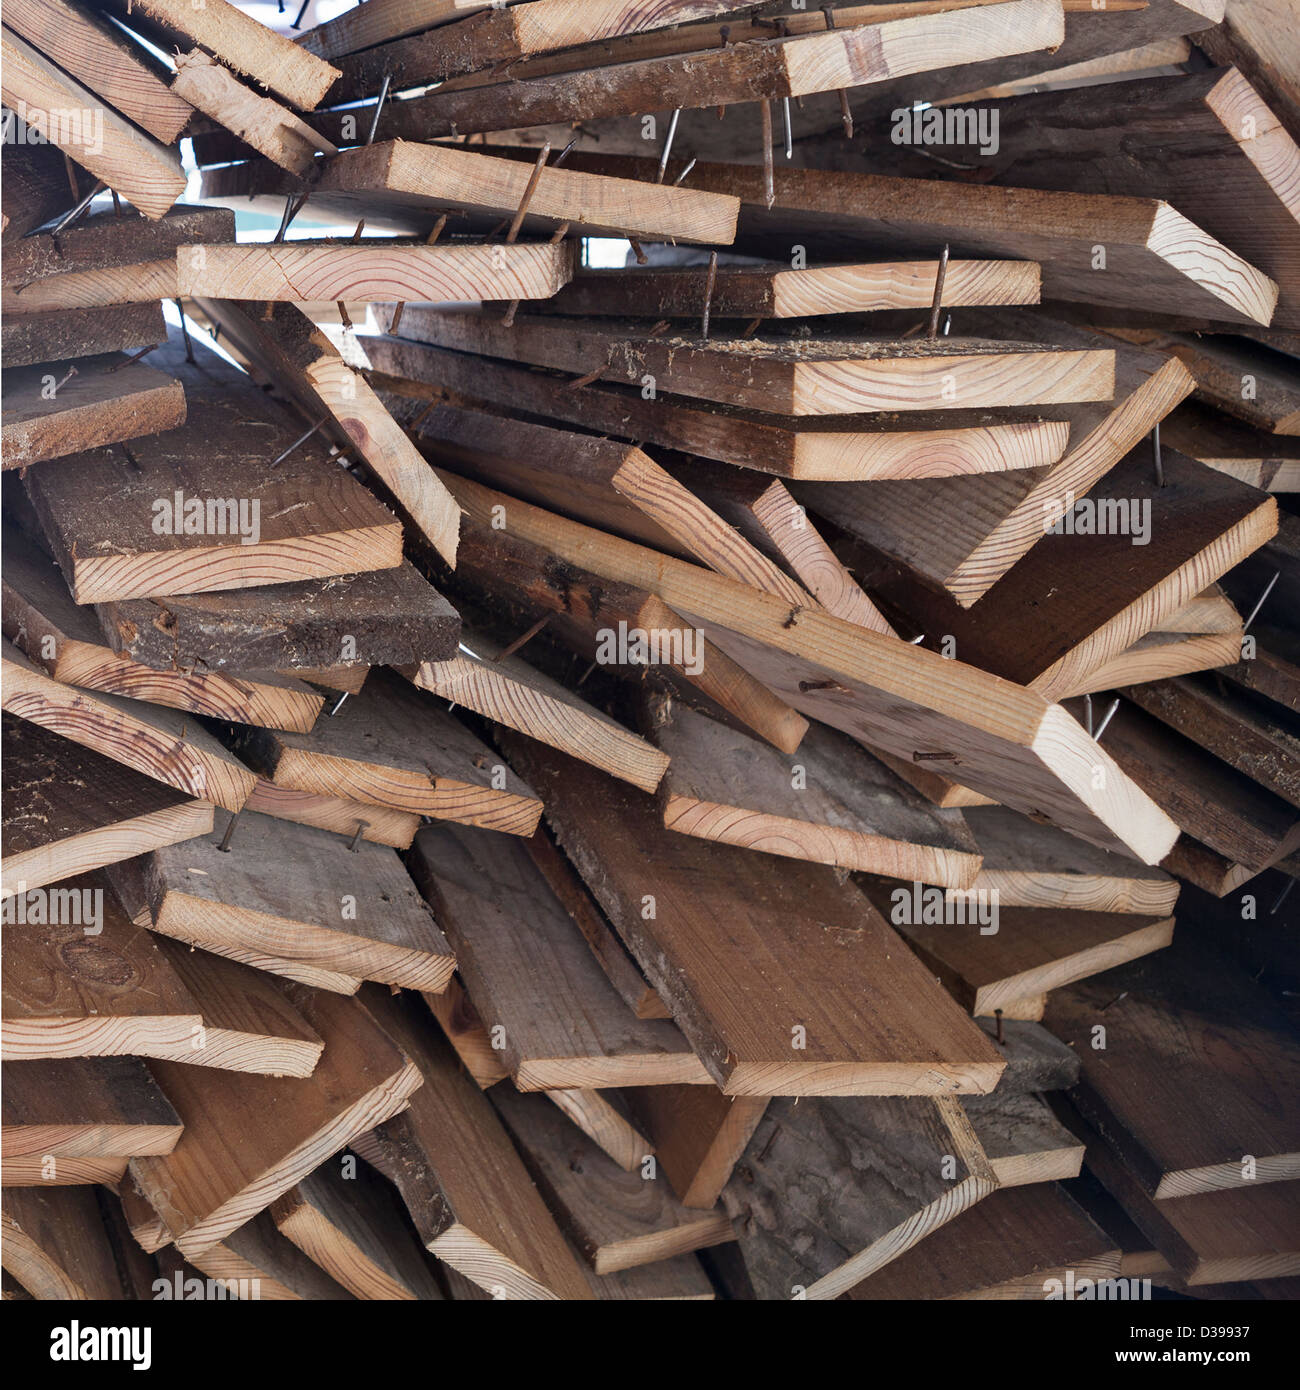 25,541 Scrap Wood Images, Stock Photos, 3D objects, & Vectors